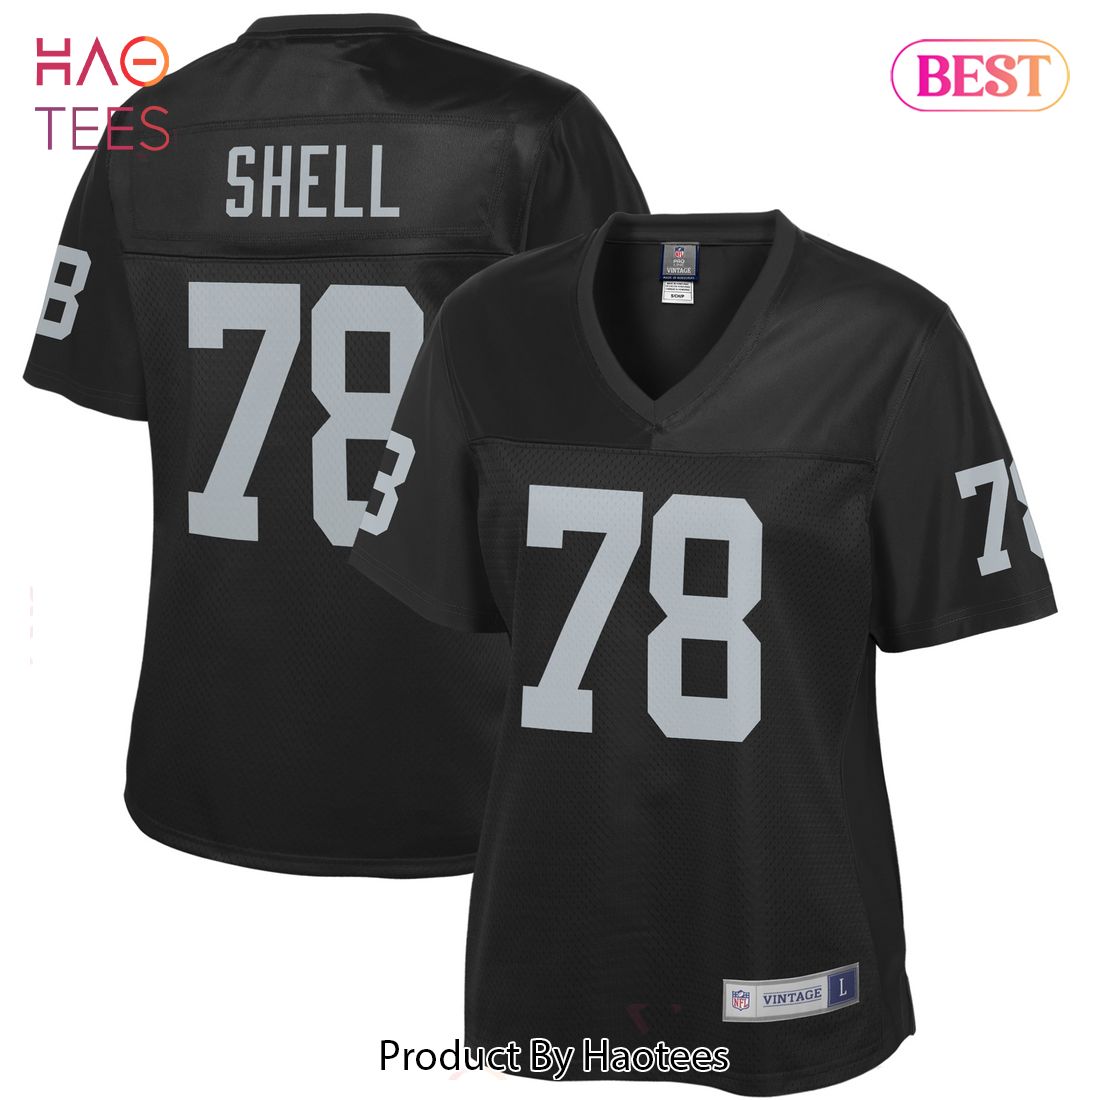 Art Shell Las Vegas Raiders NFL Pro Line Women’s Retired Player Replica Jersey Black